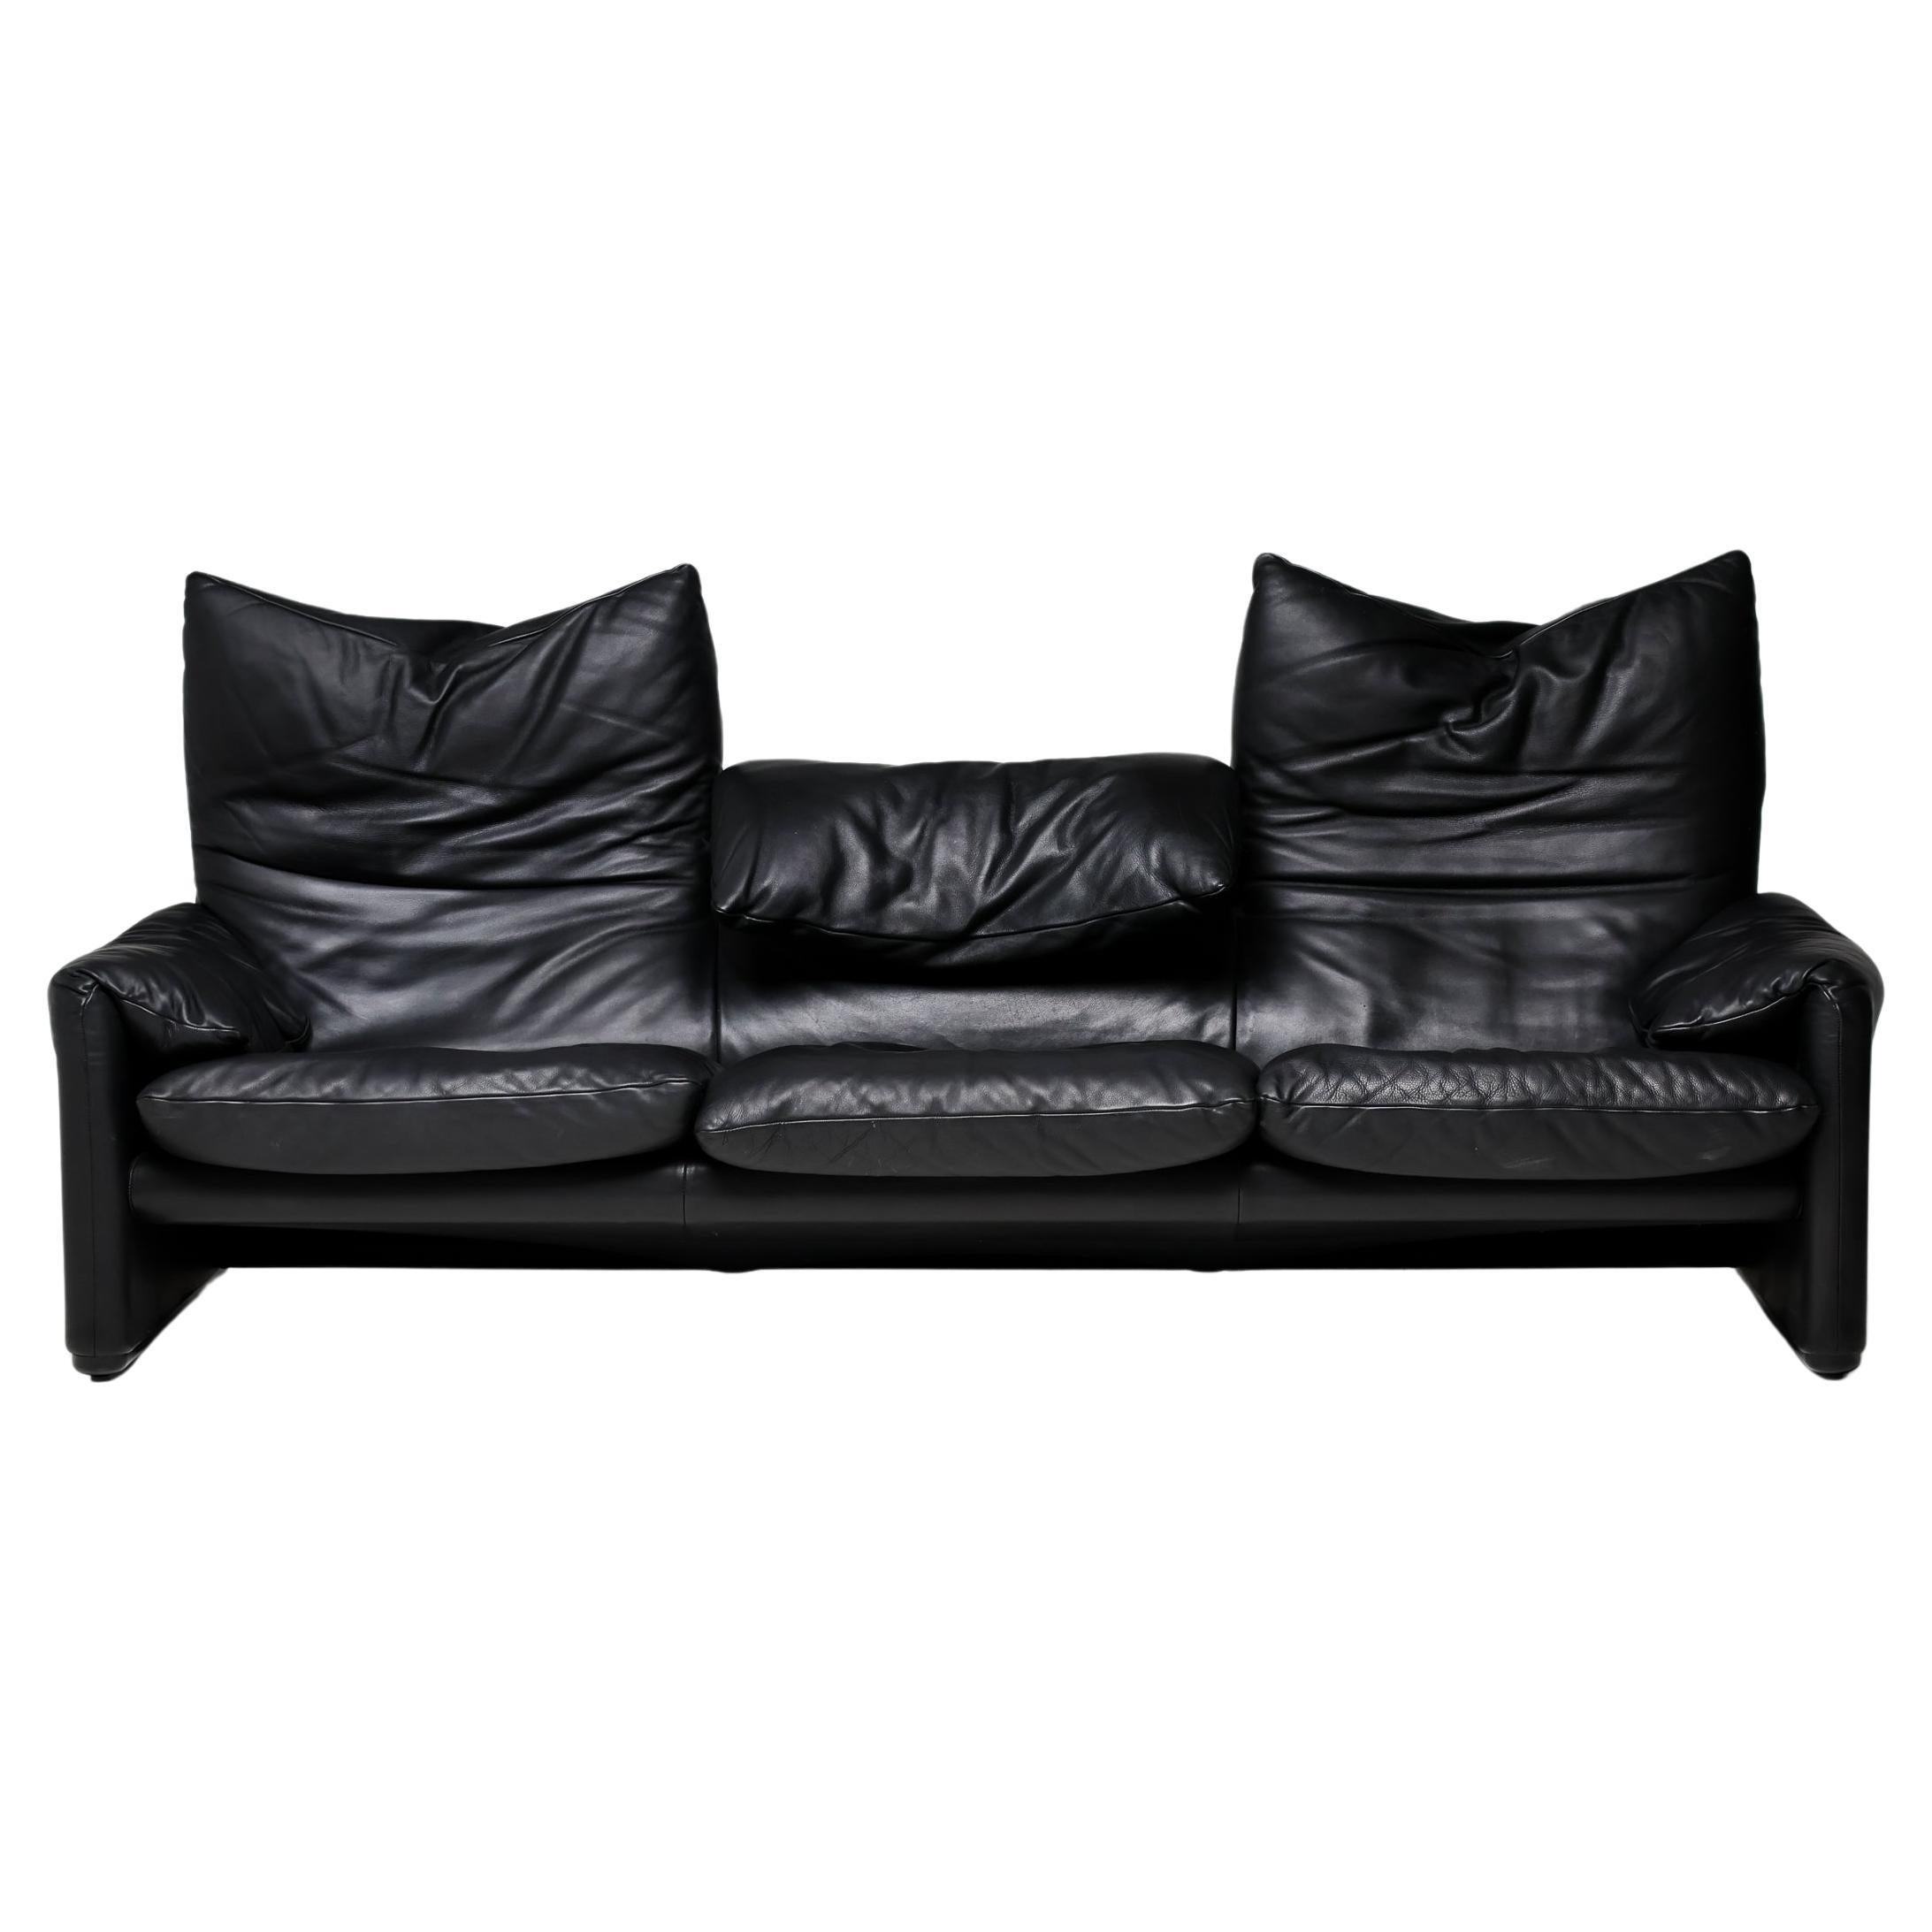 Early Black Leather Maralunga Sofa by Vico Magistretti for Cassina